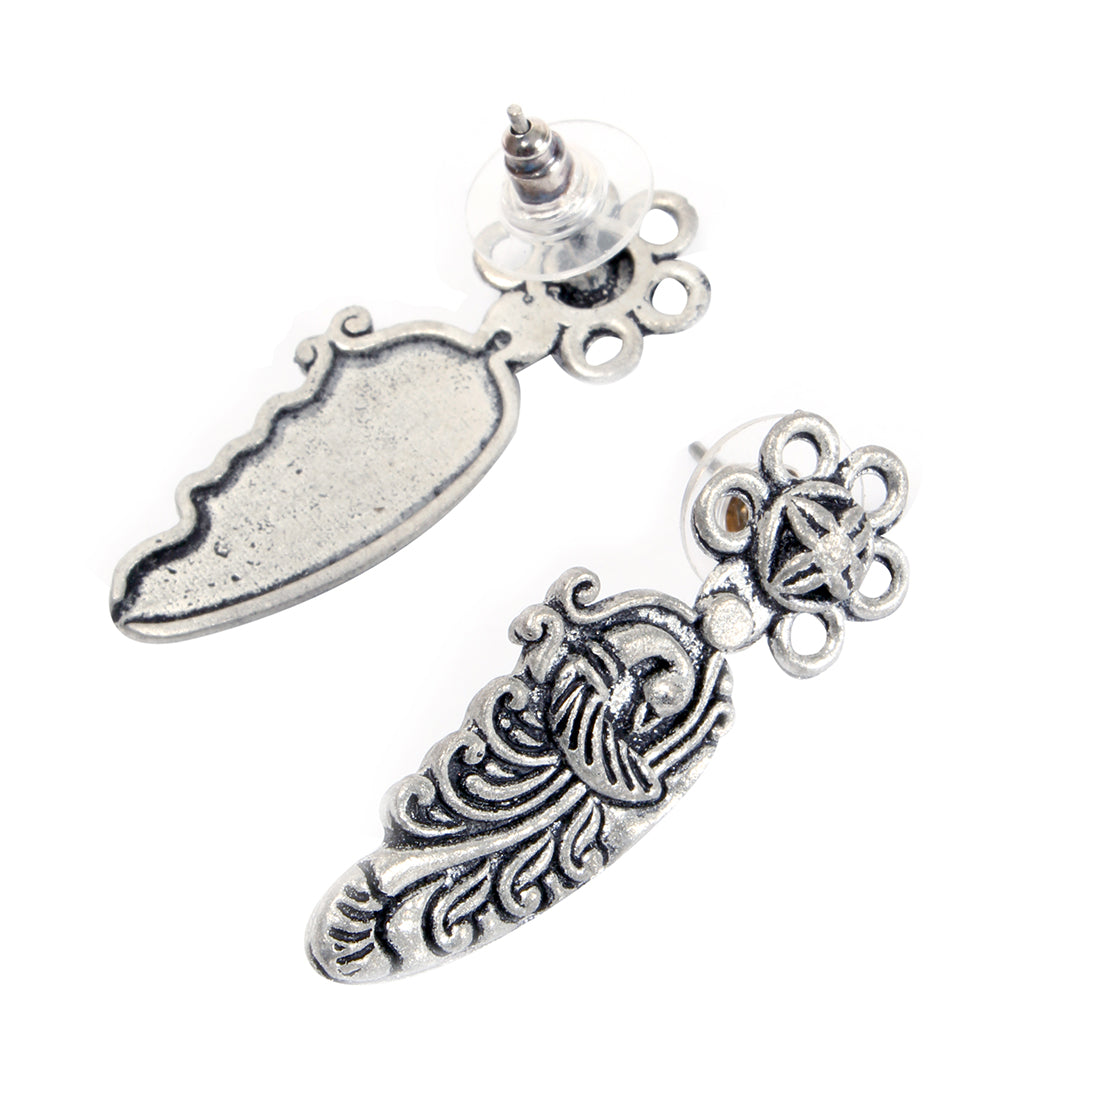 Set of Two Oxidized Silver-Toned Jhumka & Dangler Drop Earrings